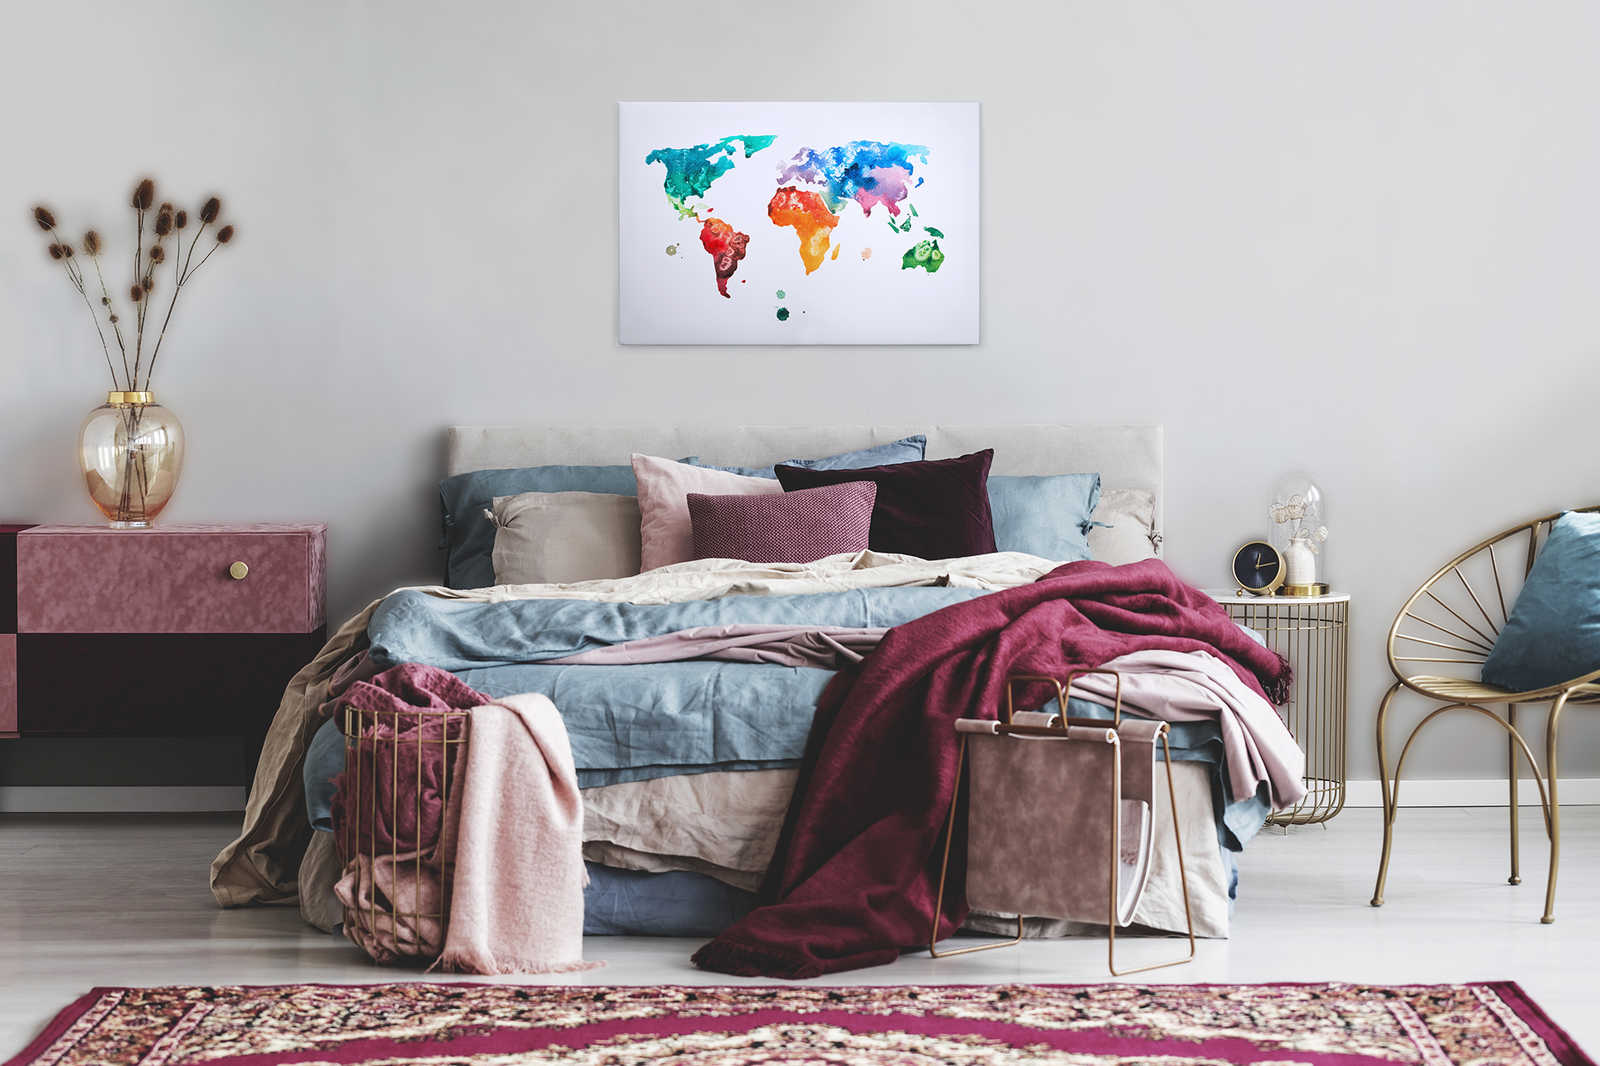             World Map Canvas in Watercolour Optics - 0.90 m x 0.60 m
        